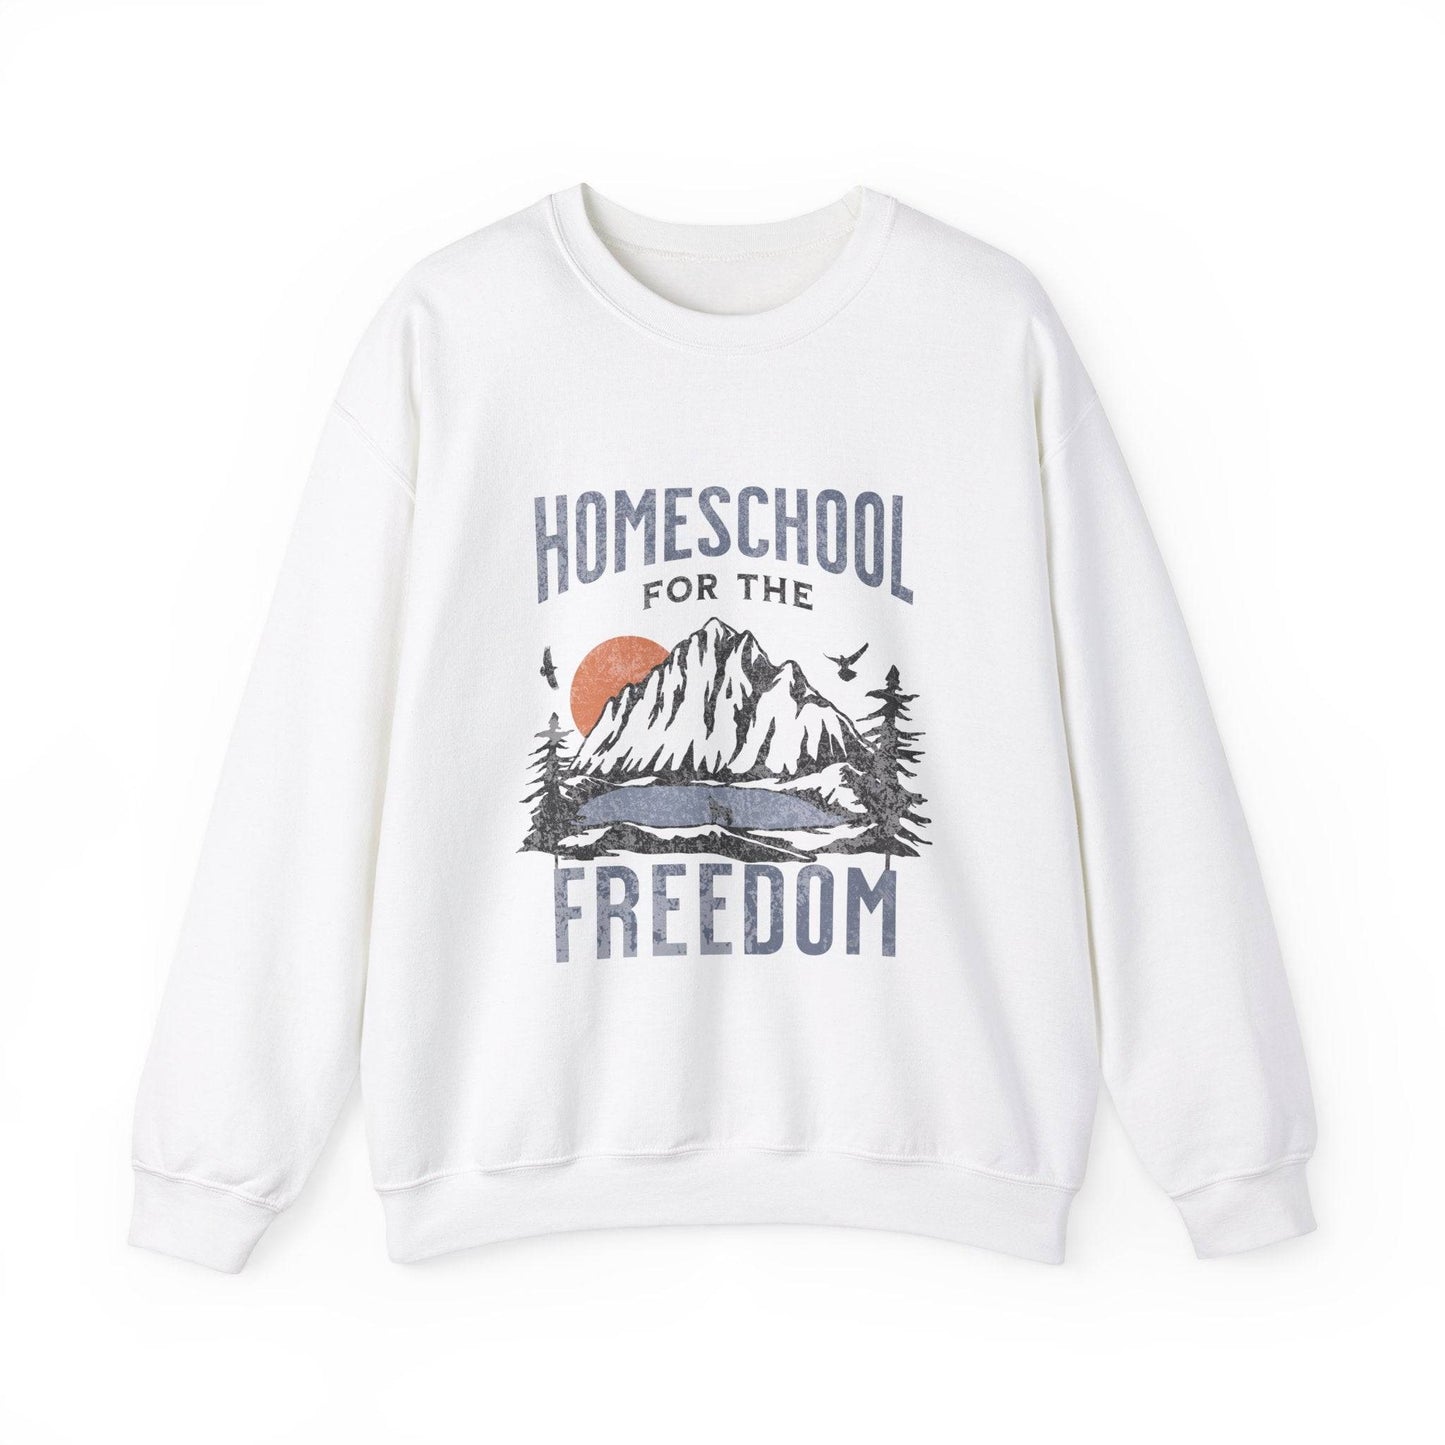 Homeschool For The Freedom Adult Crewneck Sweatshirt